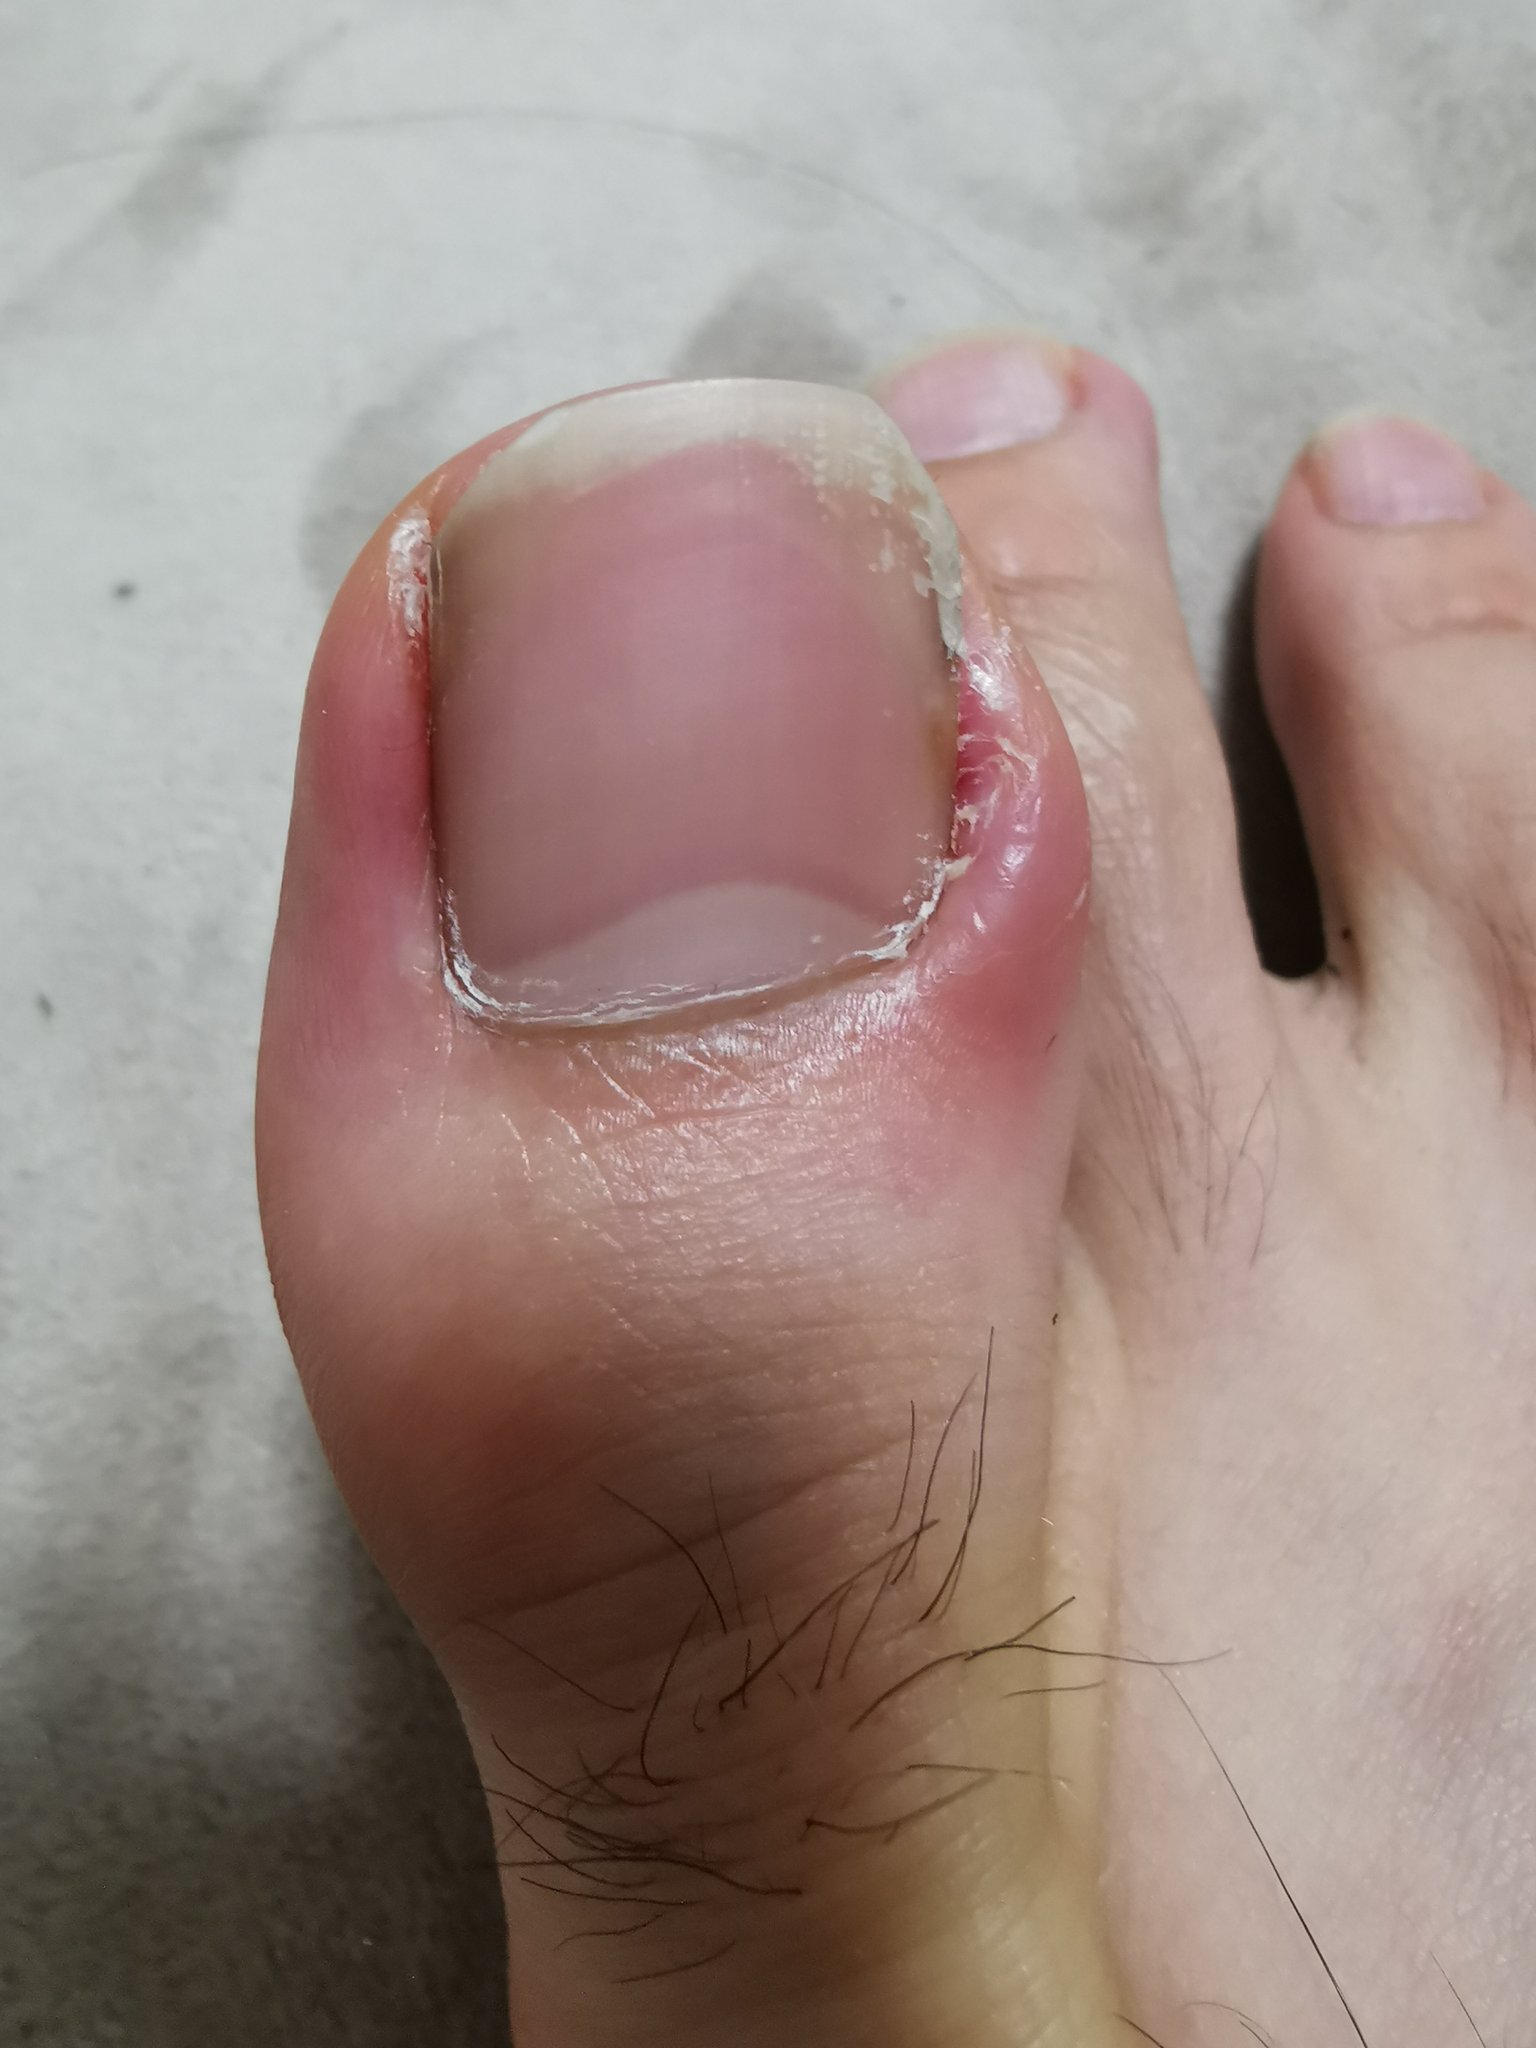 Takuma Harada V Twitter 足の指がひょうそになっちゃって痛 い でも病院行くの面倒だしなあ